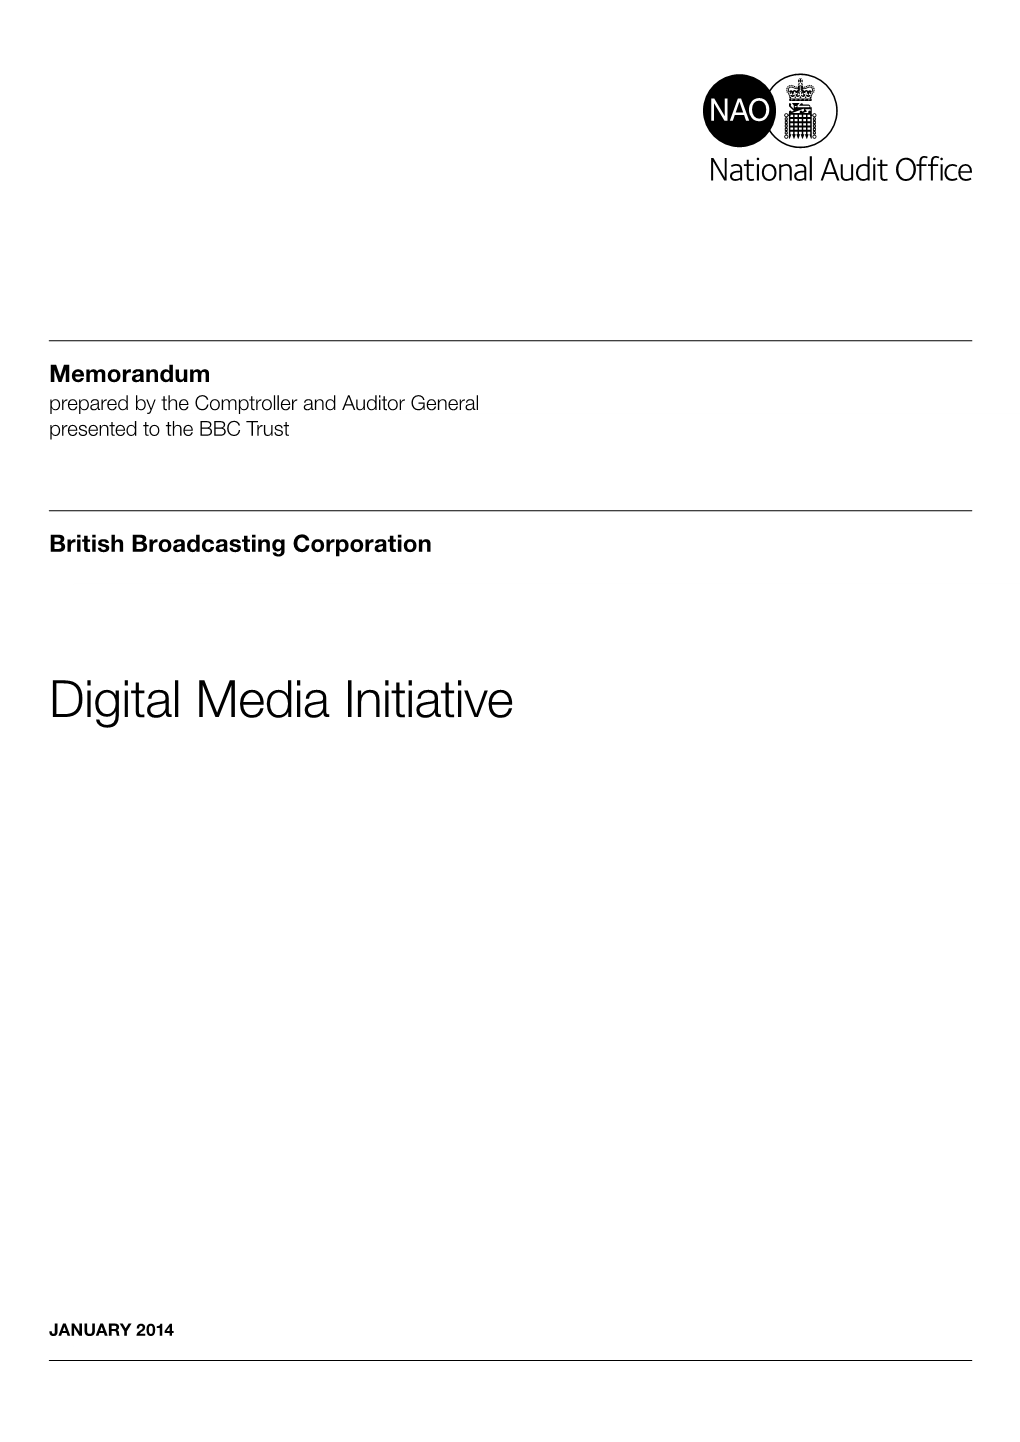 Digital Media Initiative